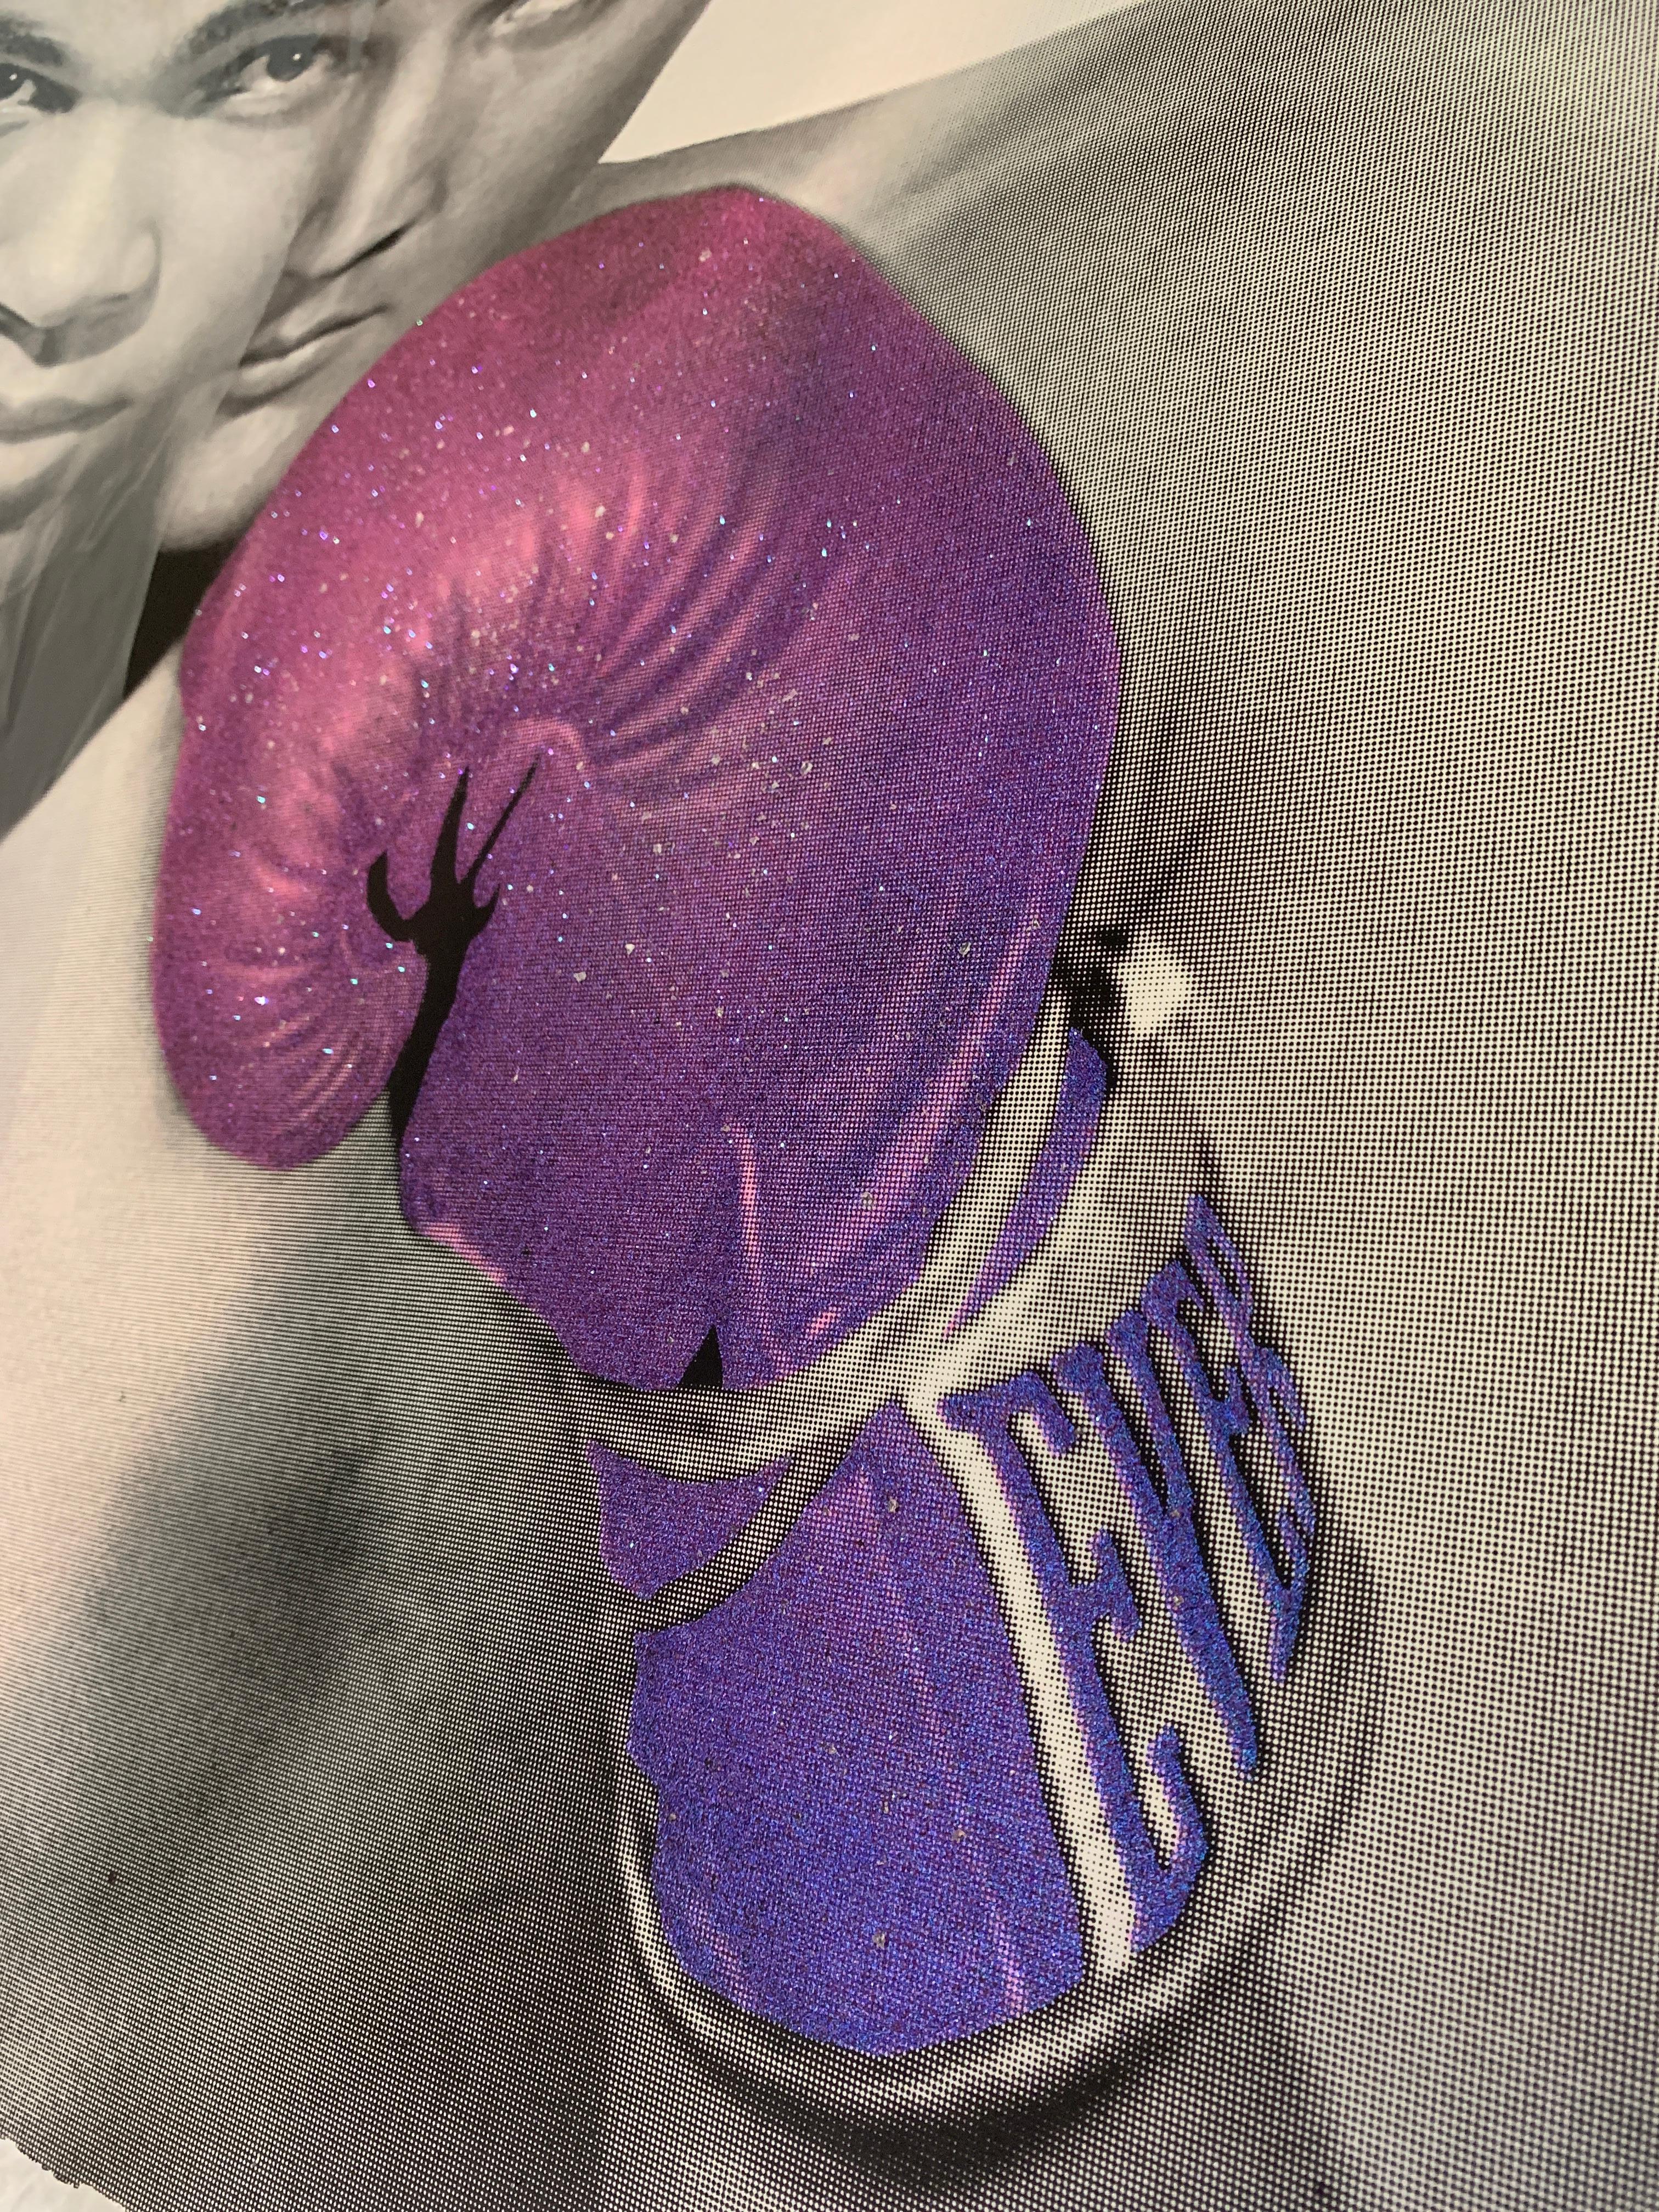 The Greatest Pink/Blue 1/10, by Julian Prolman Elvis Mohammed Ali Boxing Glitter - Pop Art Photograph by House of Orion